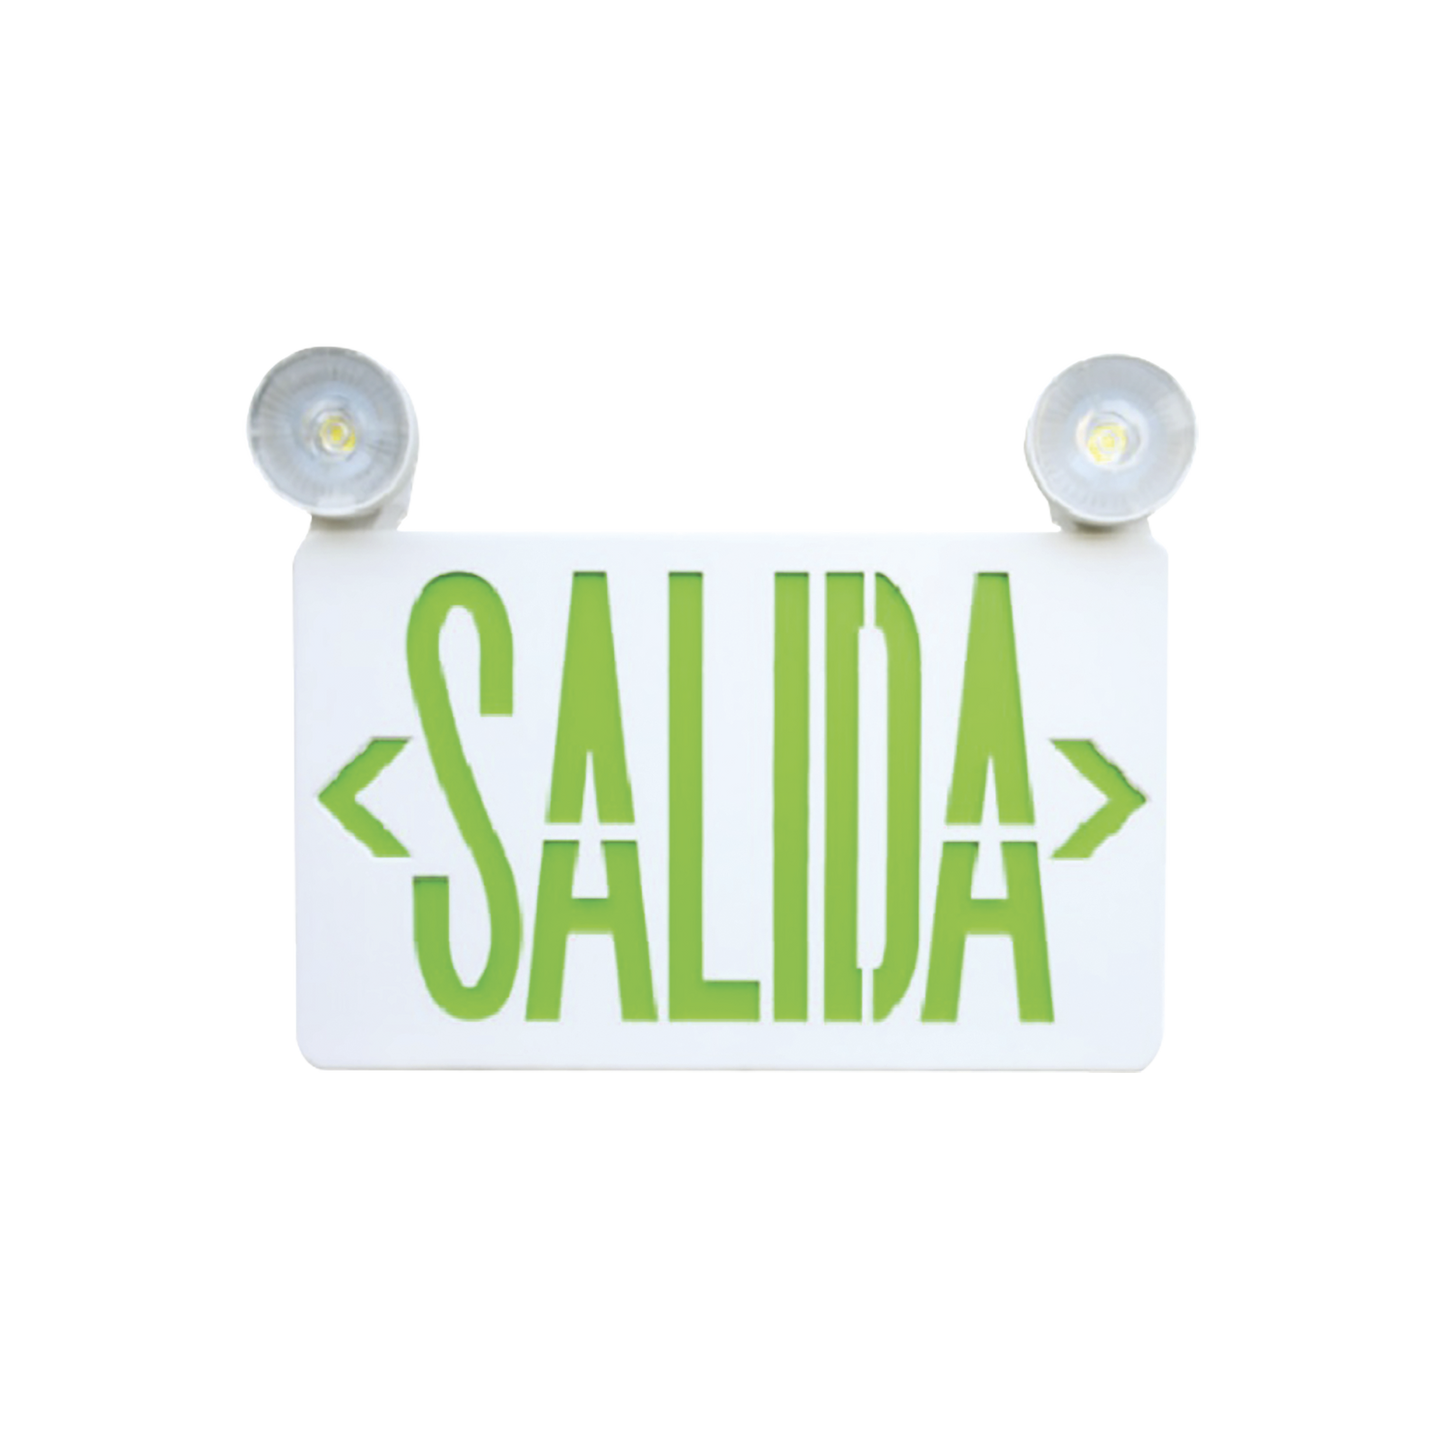 Letrero LED de SALIDA con Luz de Emergencia/Montaje Universal (pared, lateral o Techo)/Batería de Respaldo Incluida